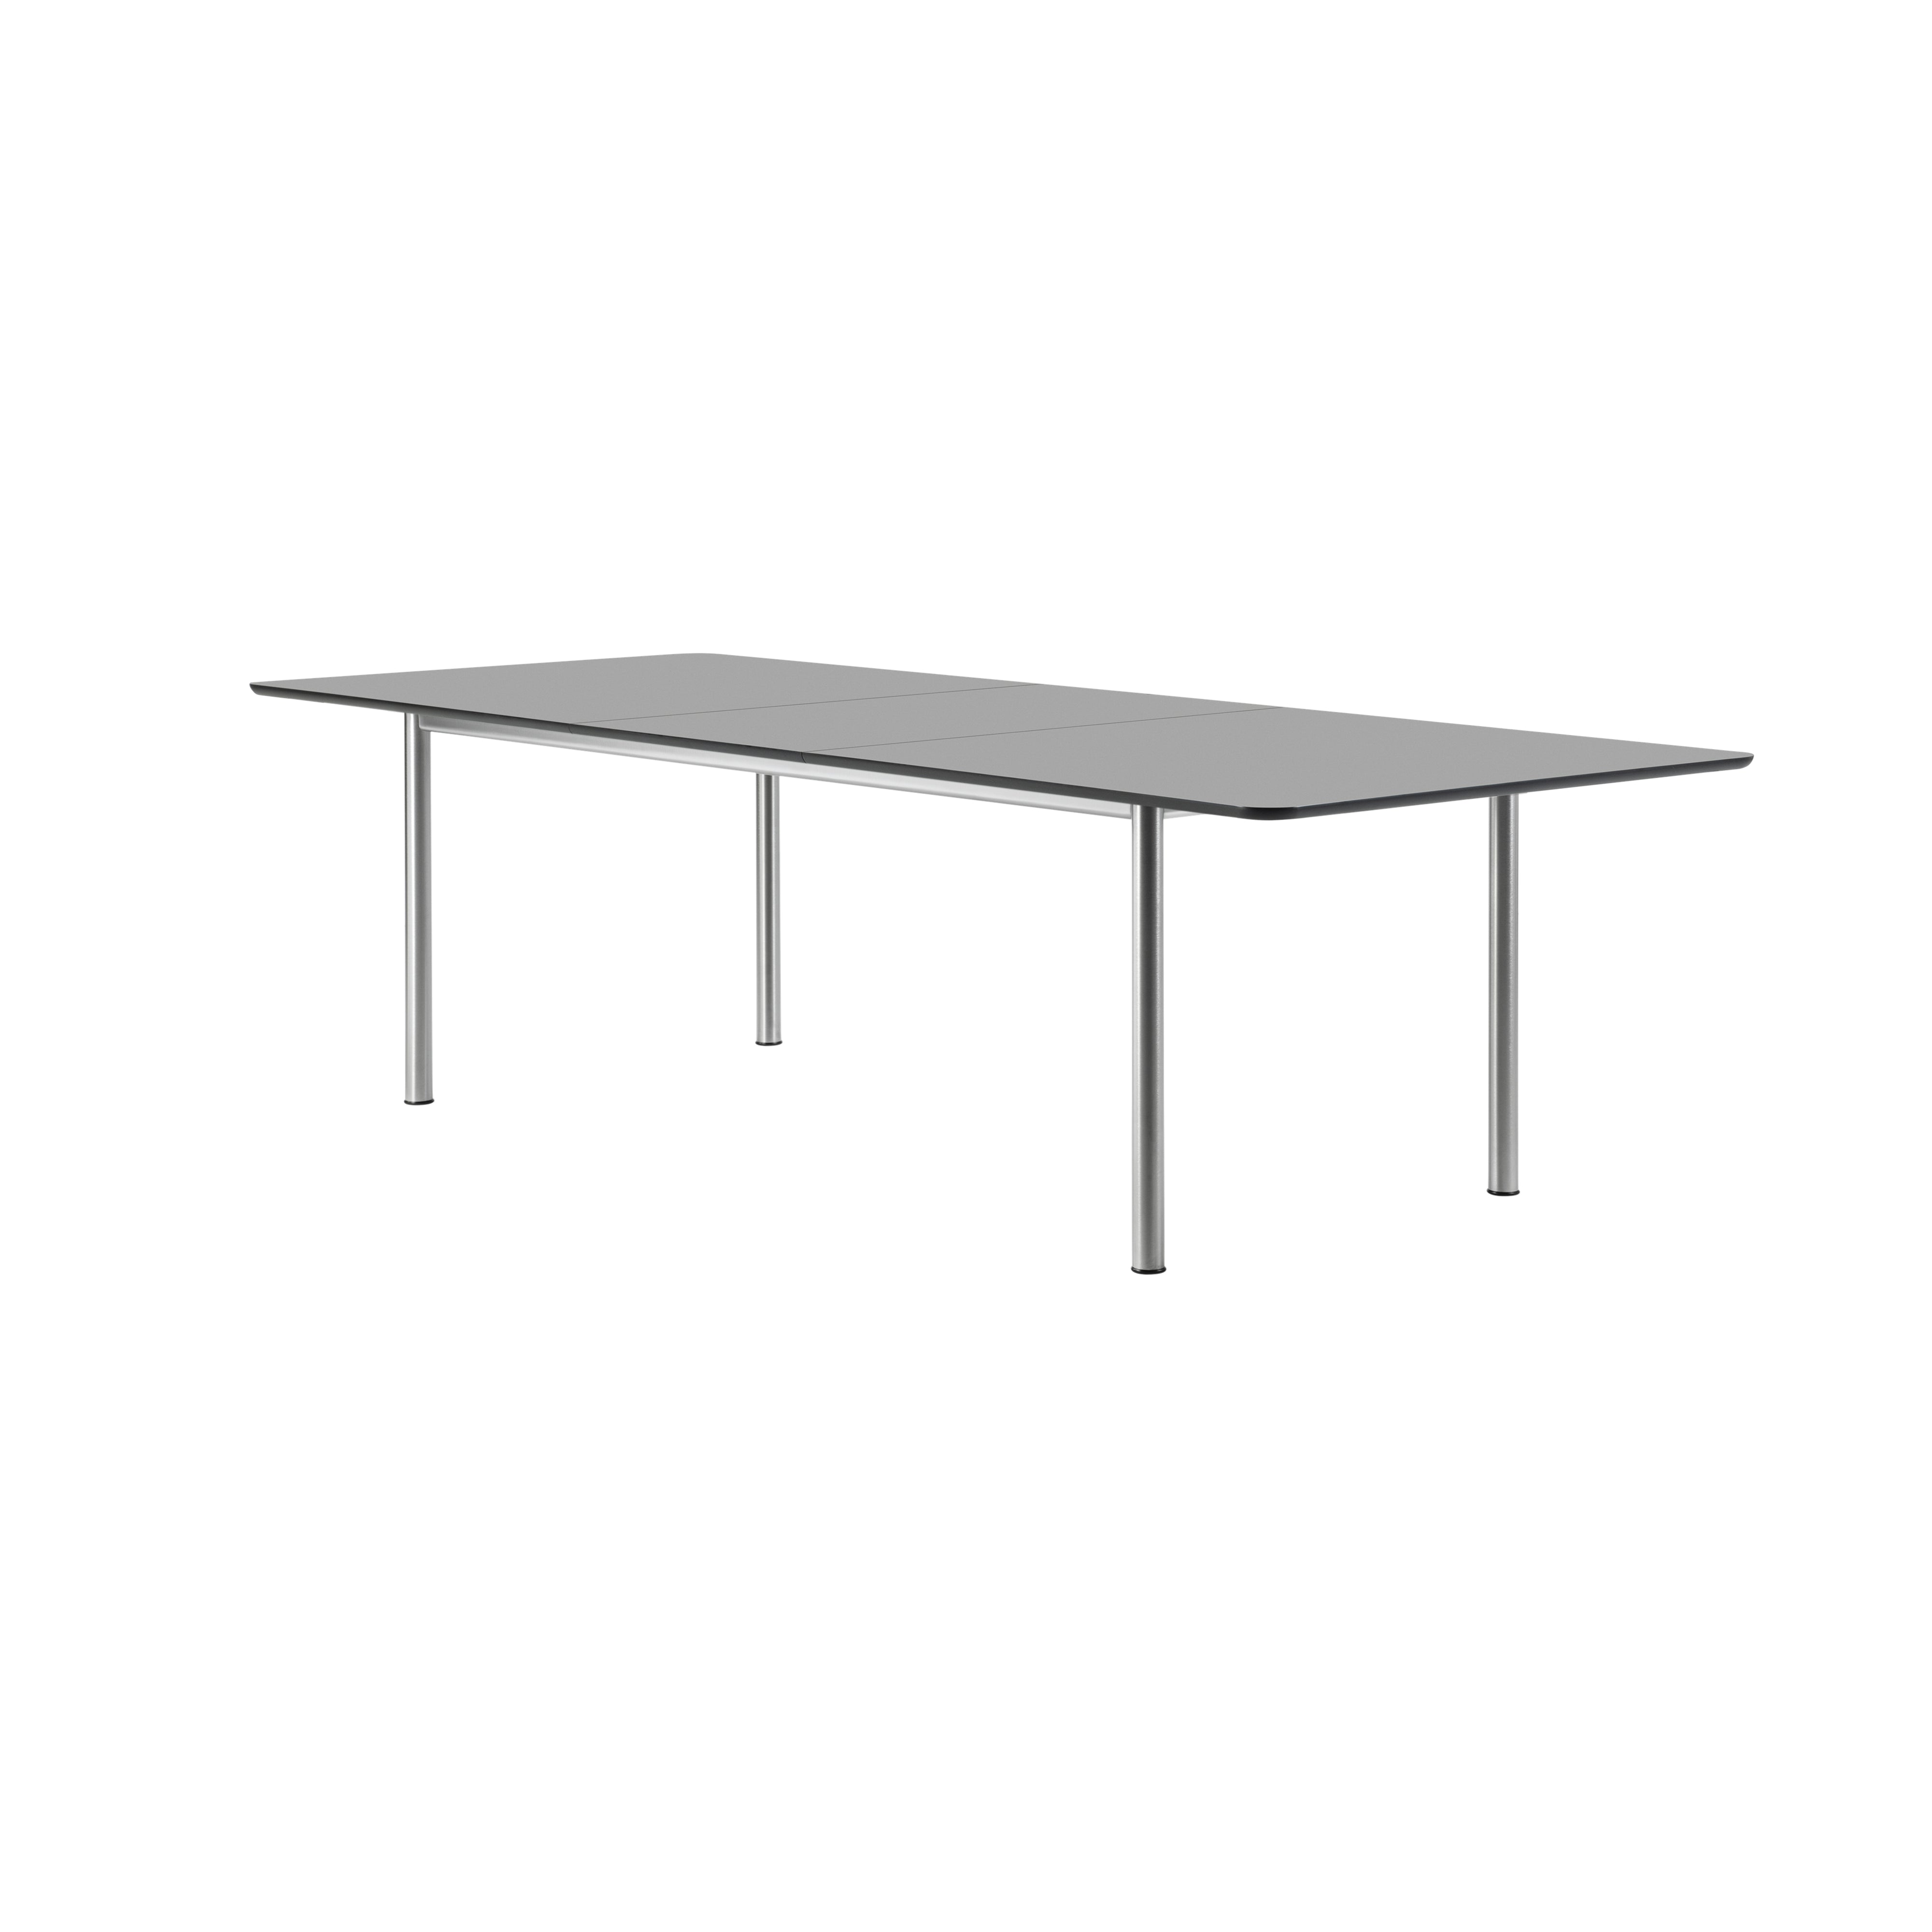 Plan Extendable Table: Black Laminate + Brushed Steel